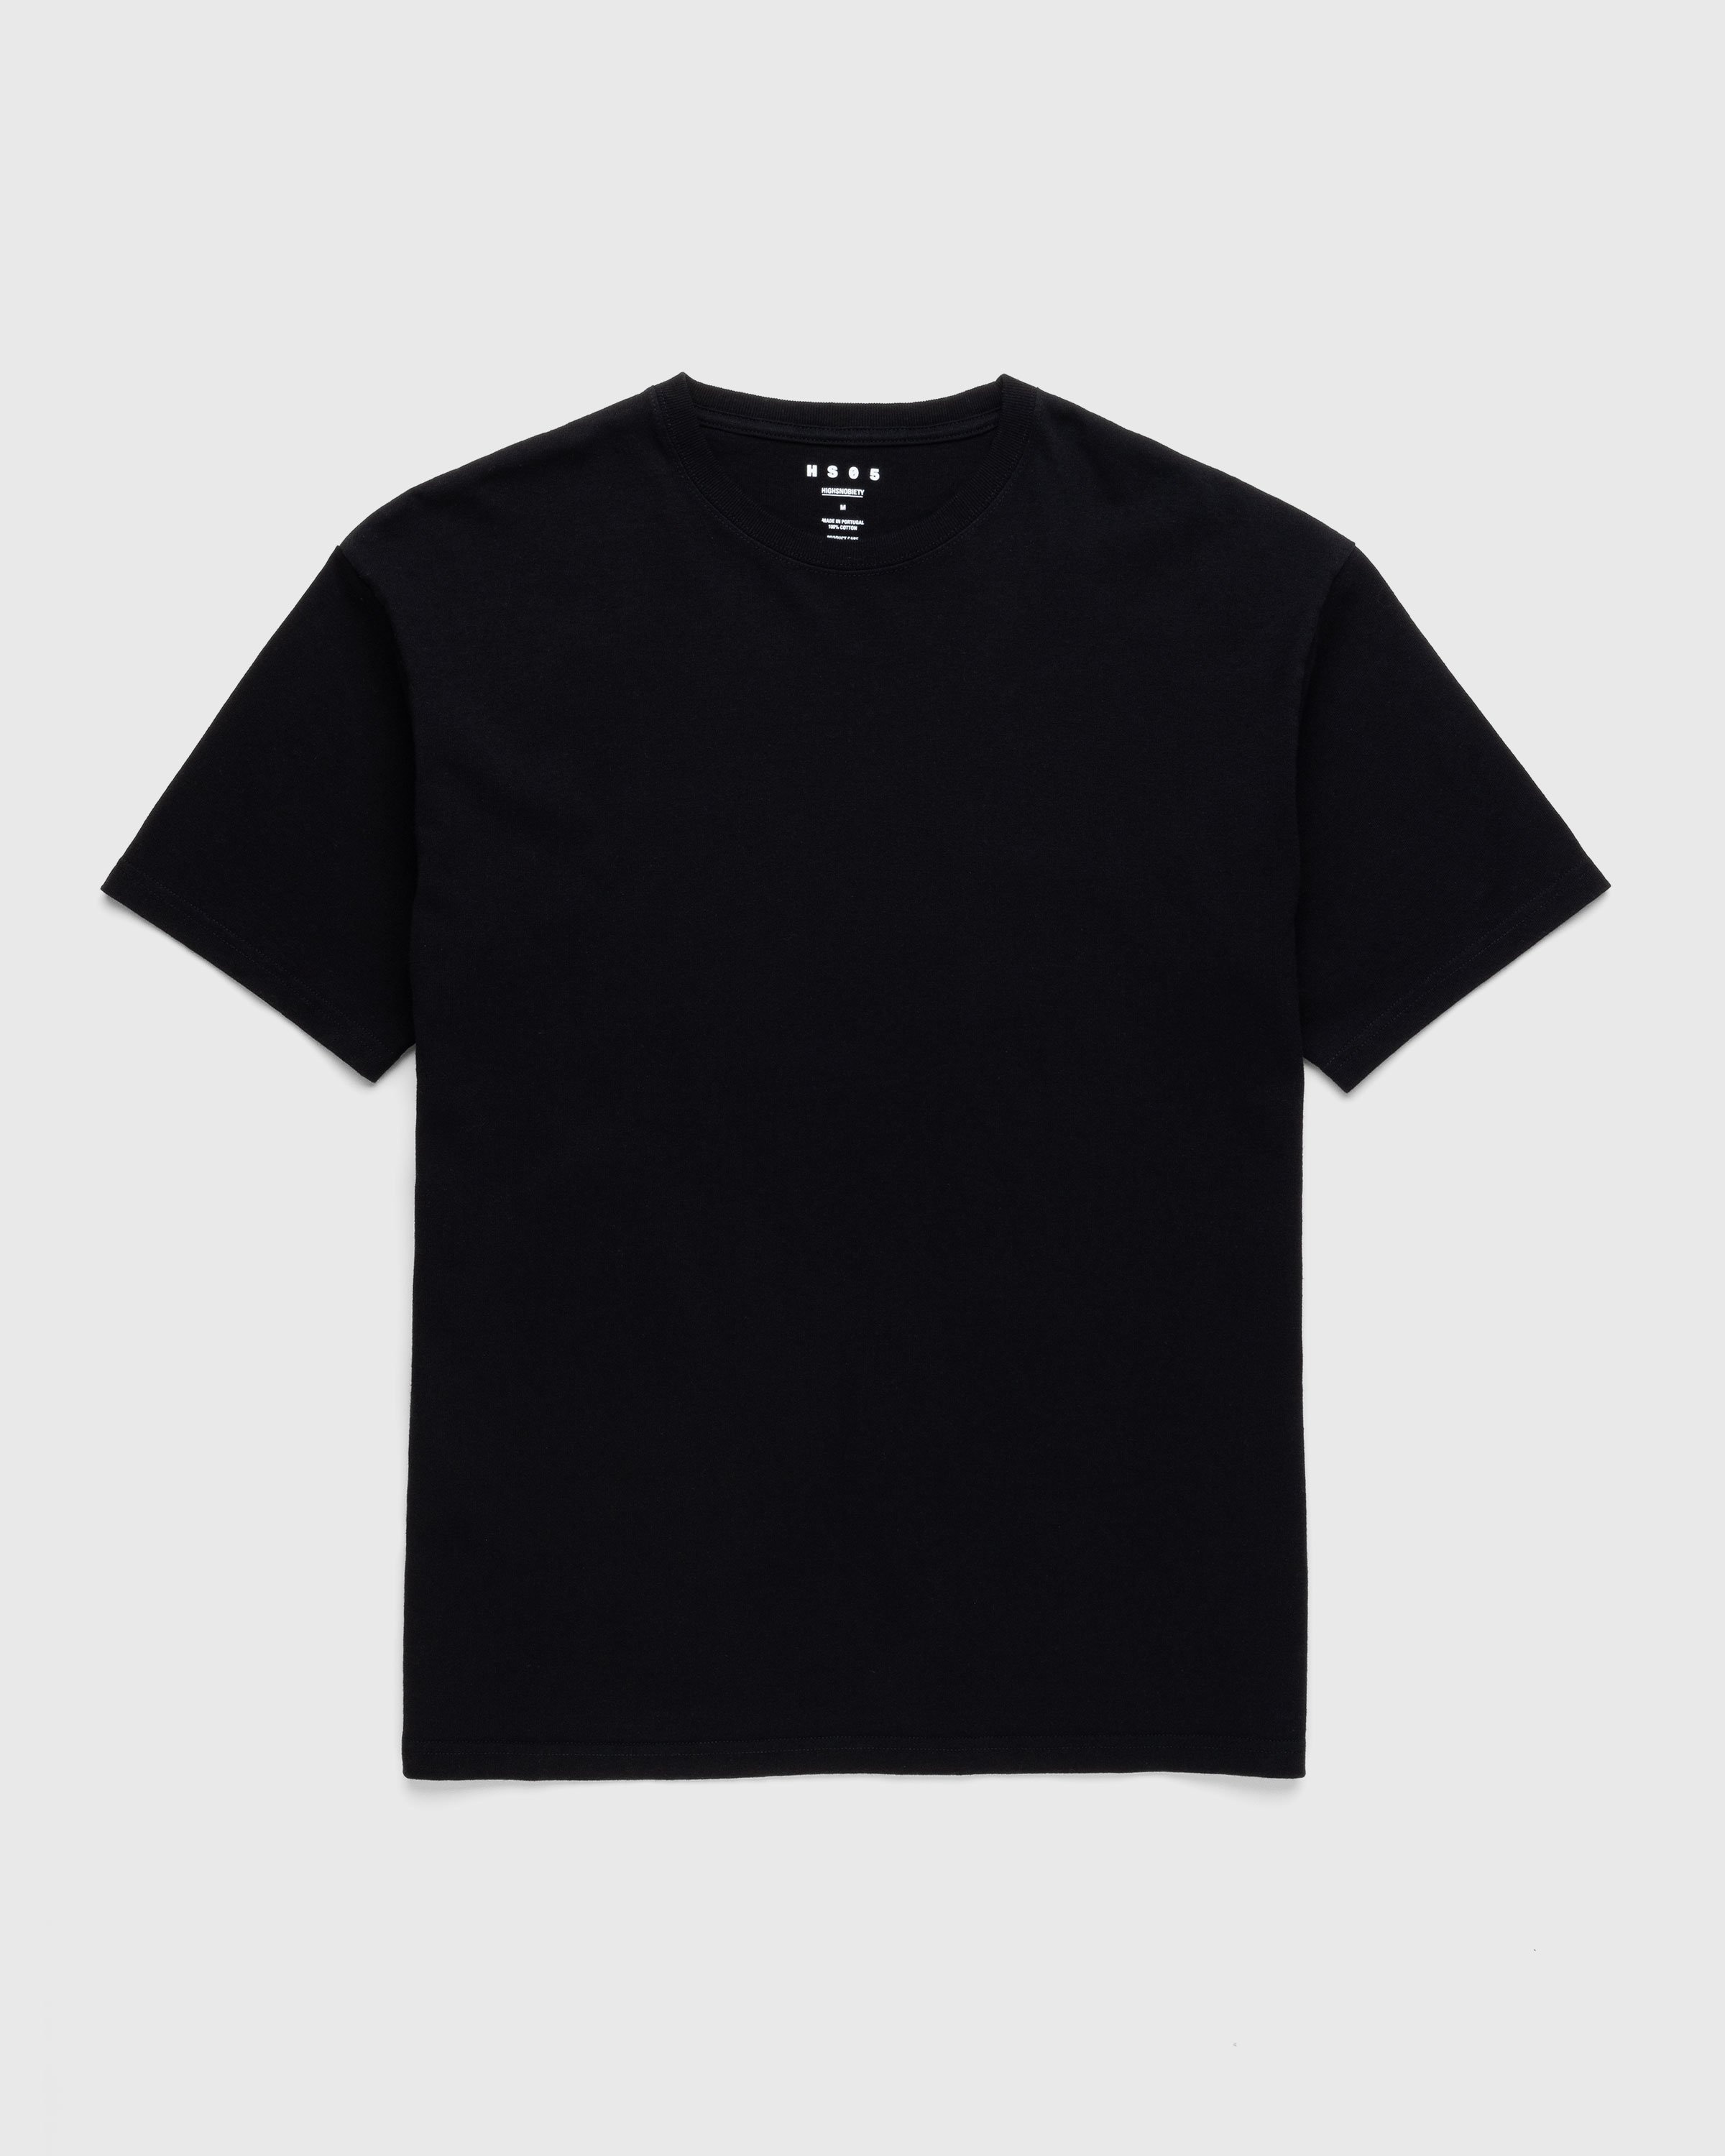 Highsnobiety HS05 – 3 Pack T-Shirts Black - T-shirts - Black - Image 2